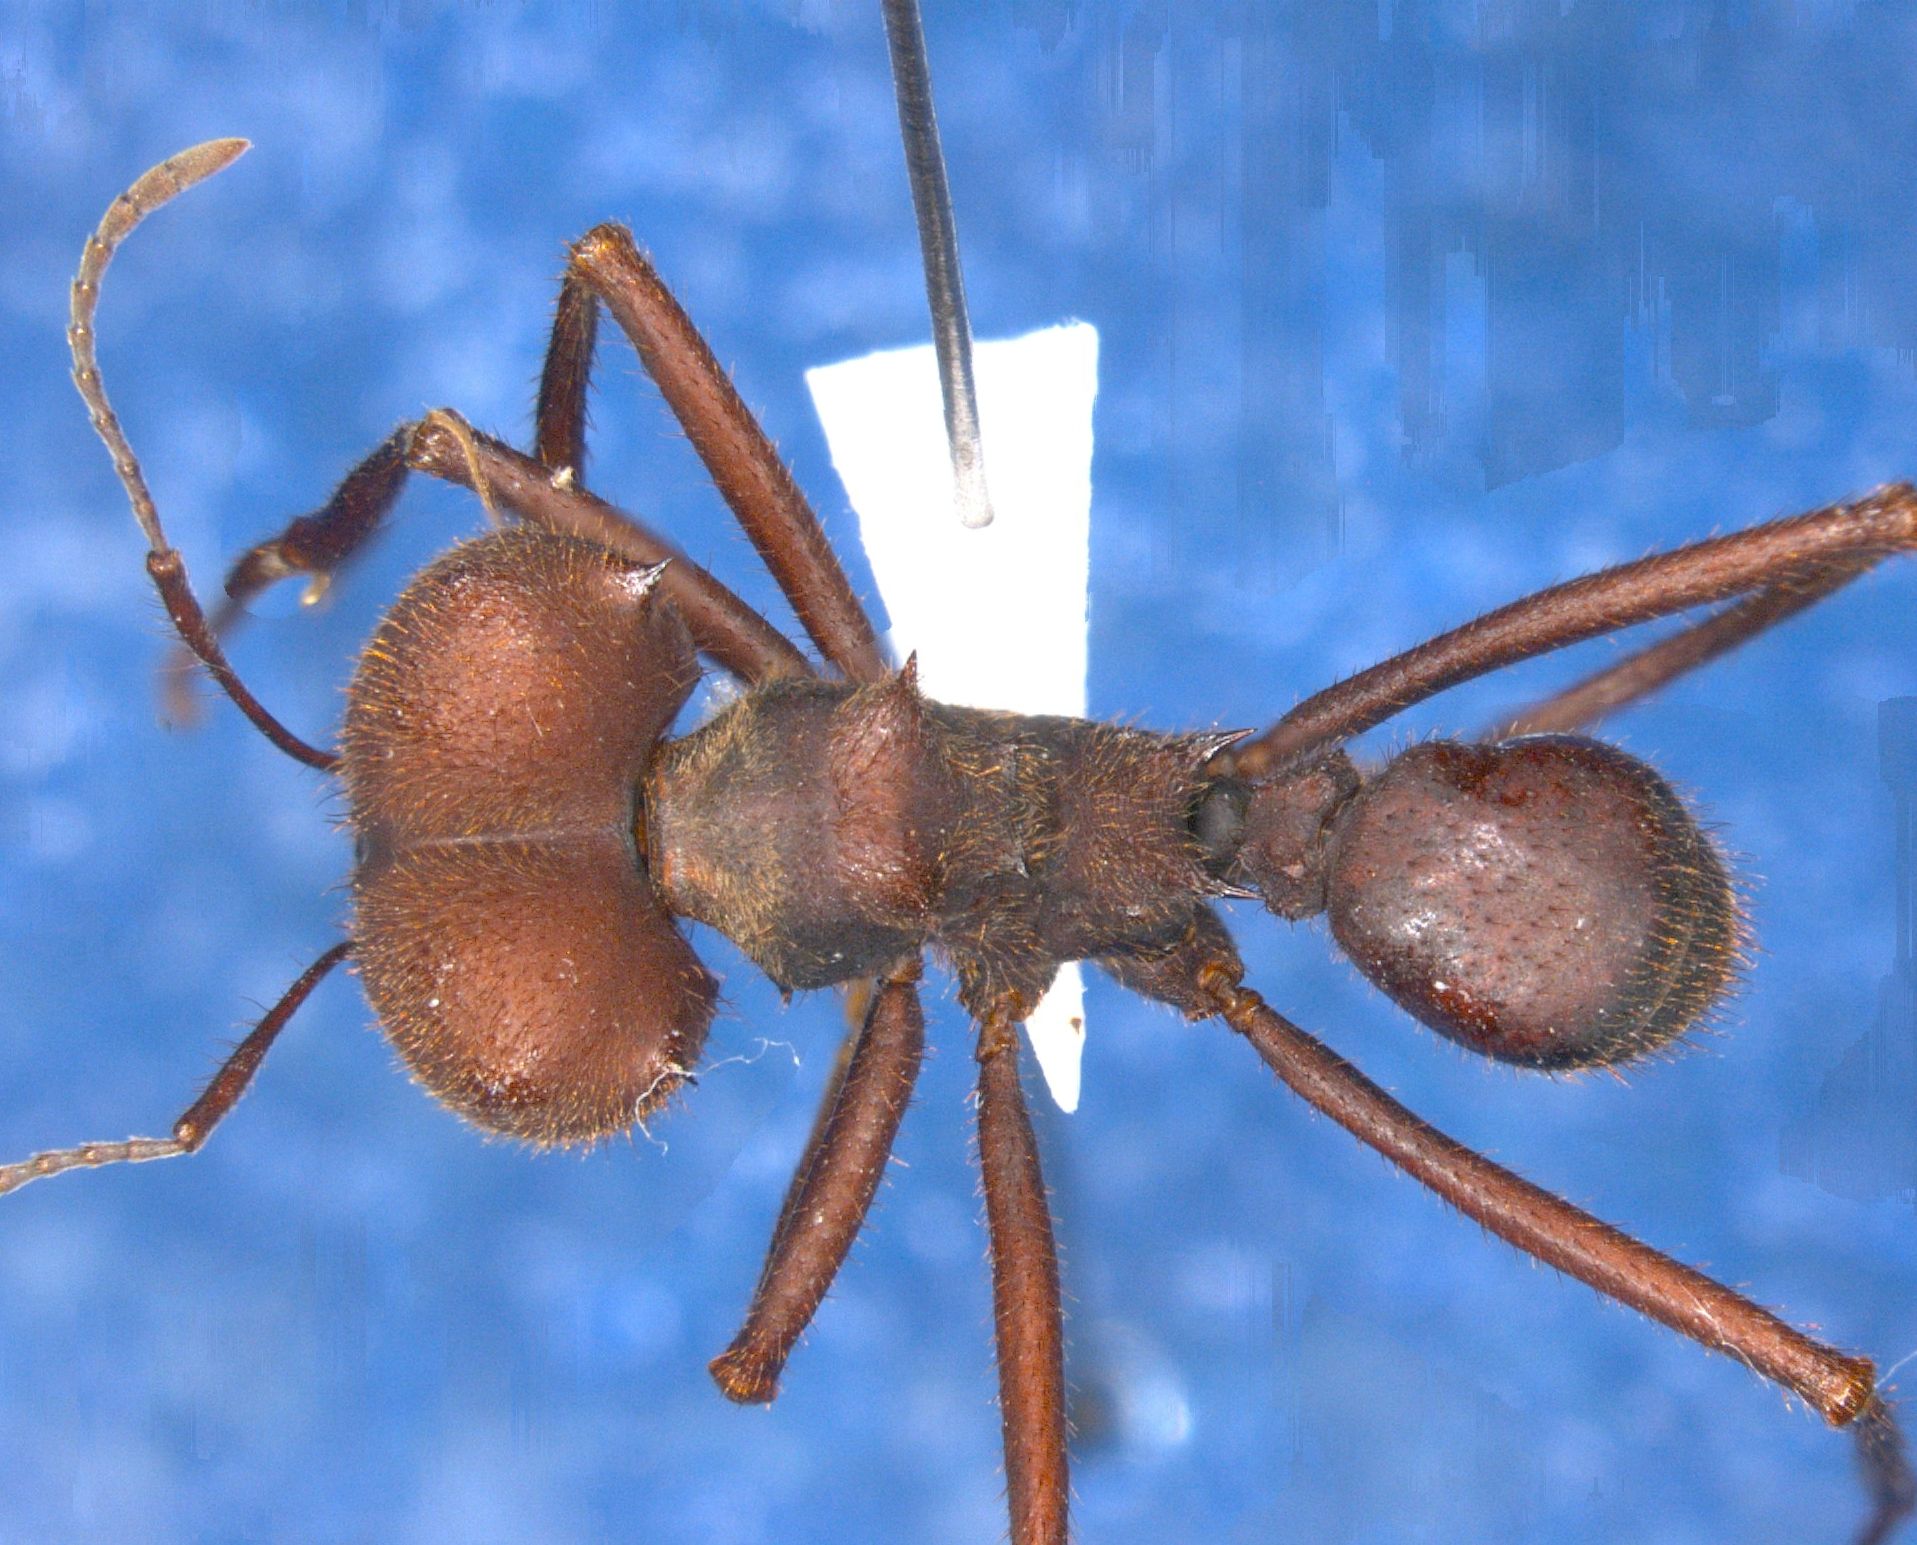 Atta sexdens - Superior The Virtual Museum of Attini Ants